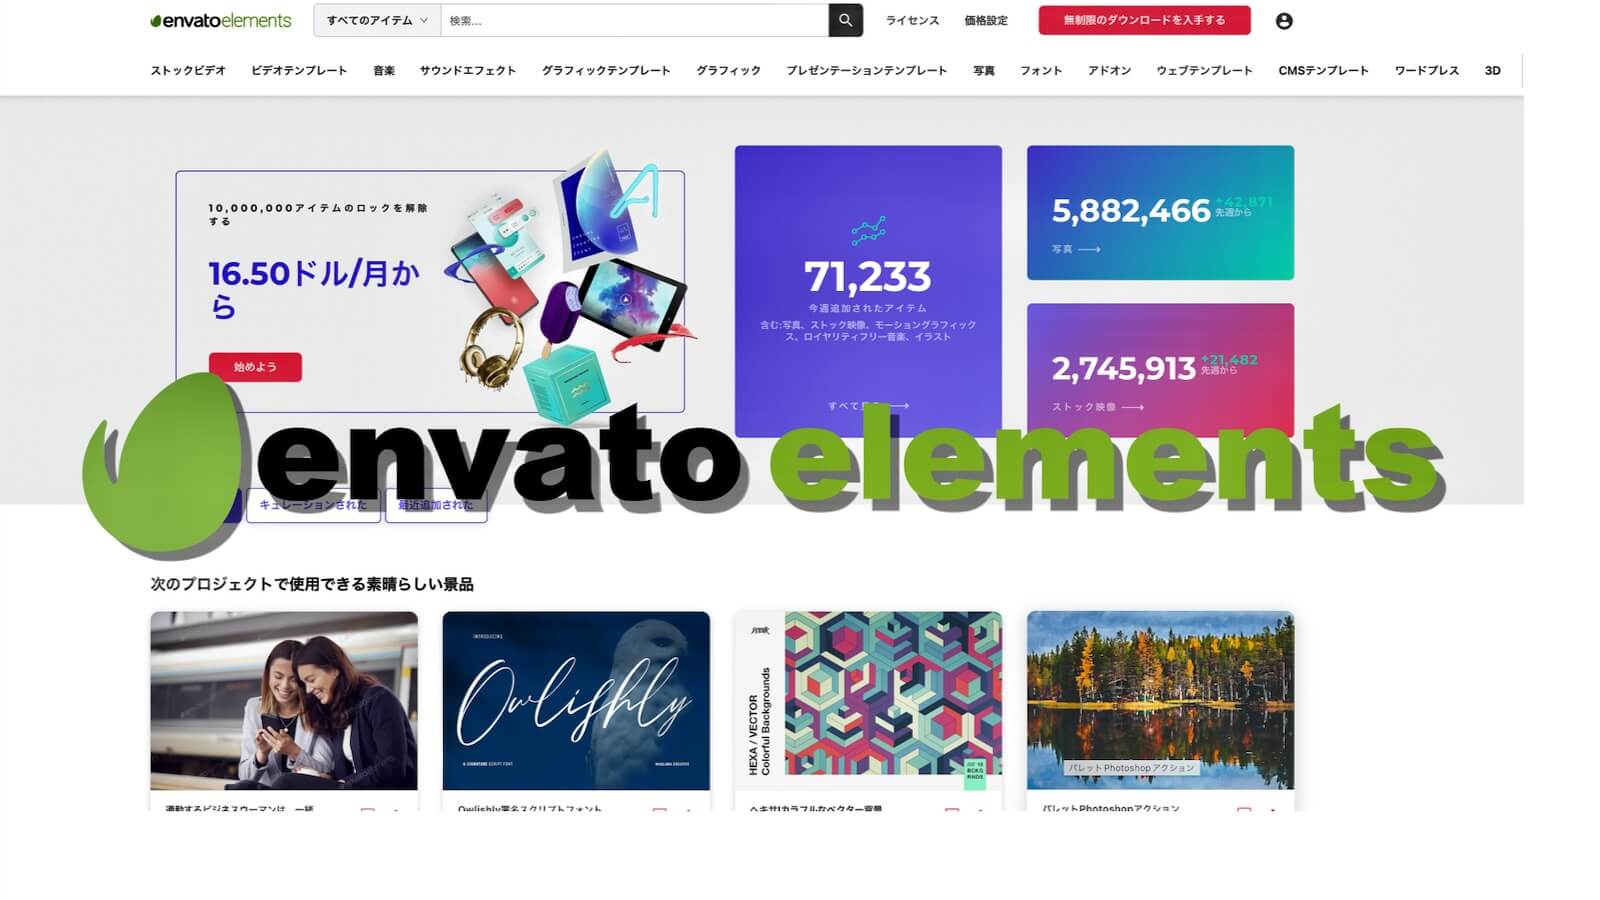 envato elements homepage image